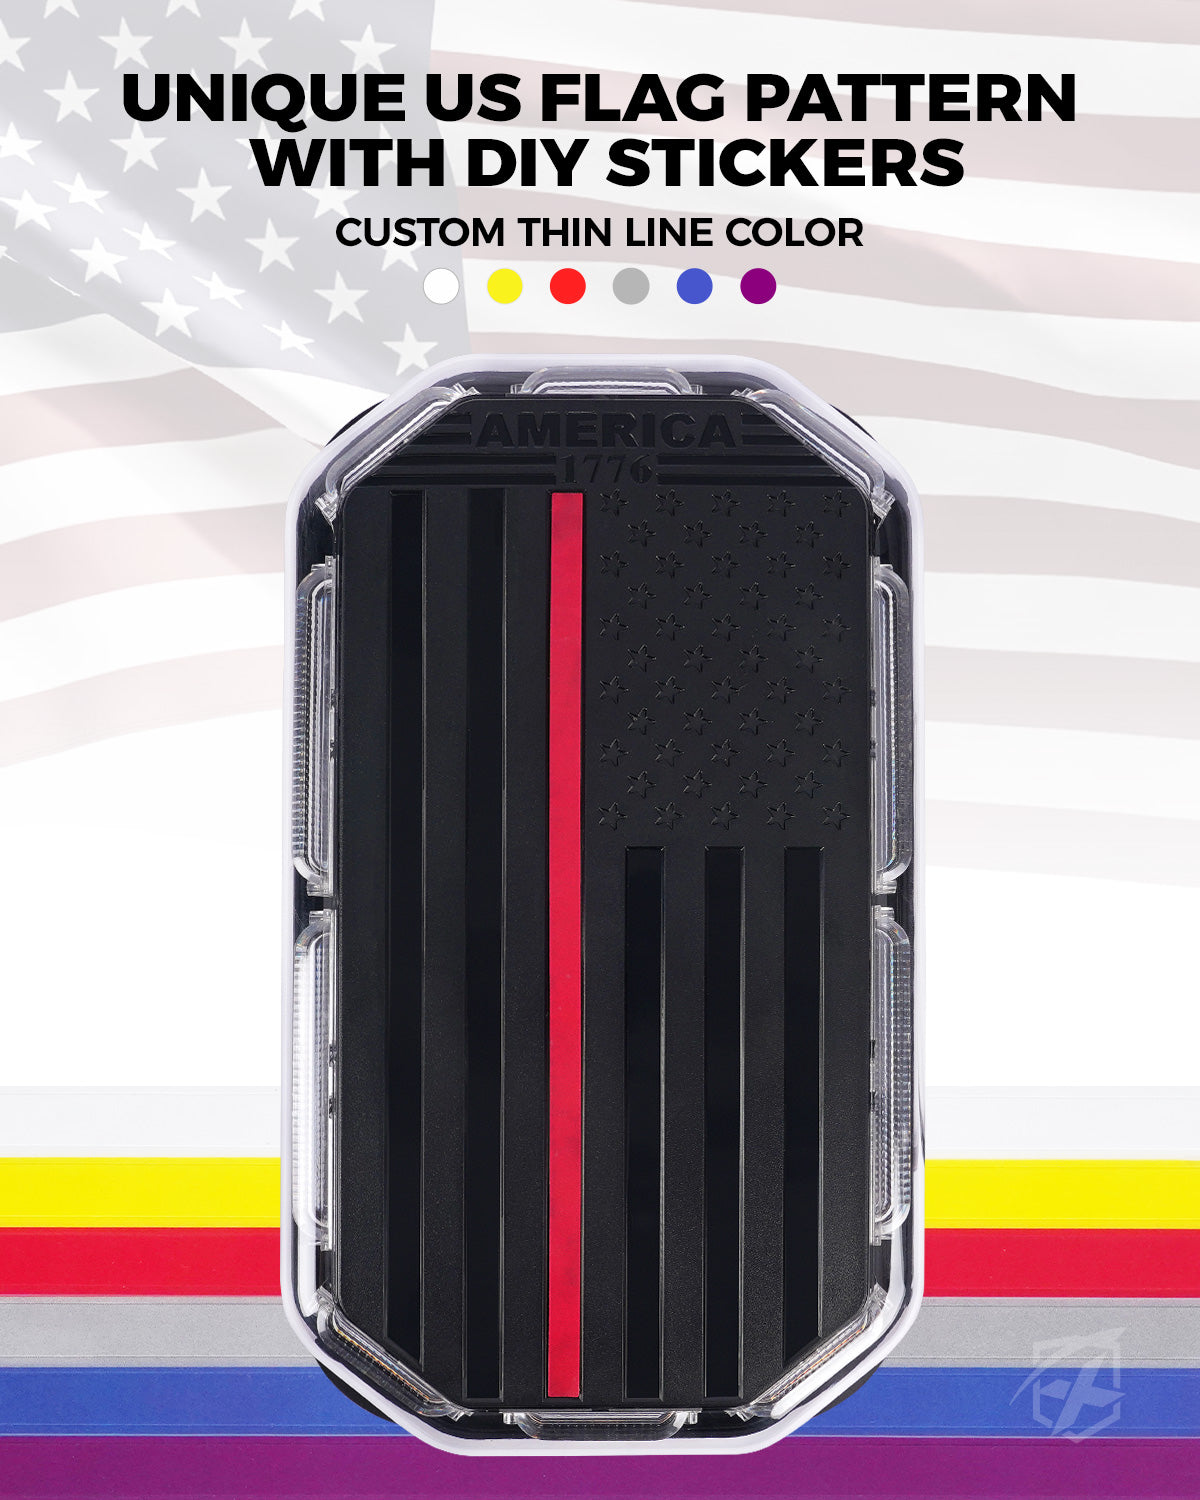 15-inch Emergency Light Bar for Trucks with American Flag Design